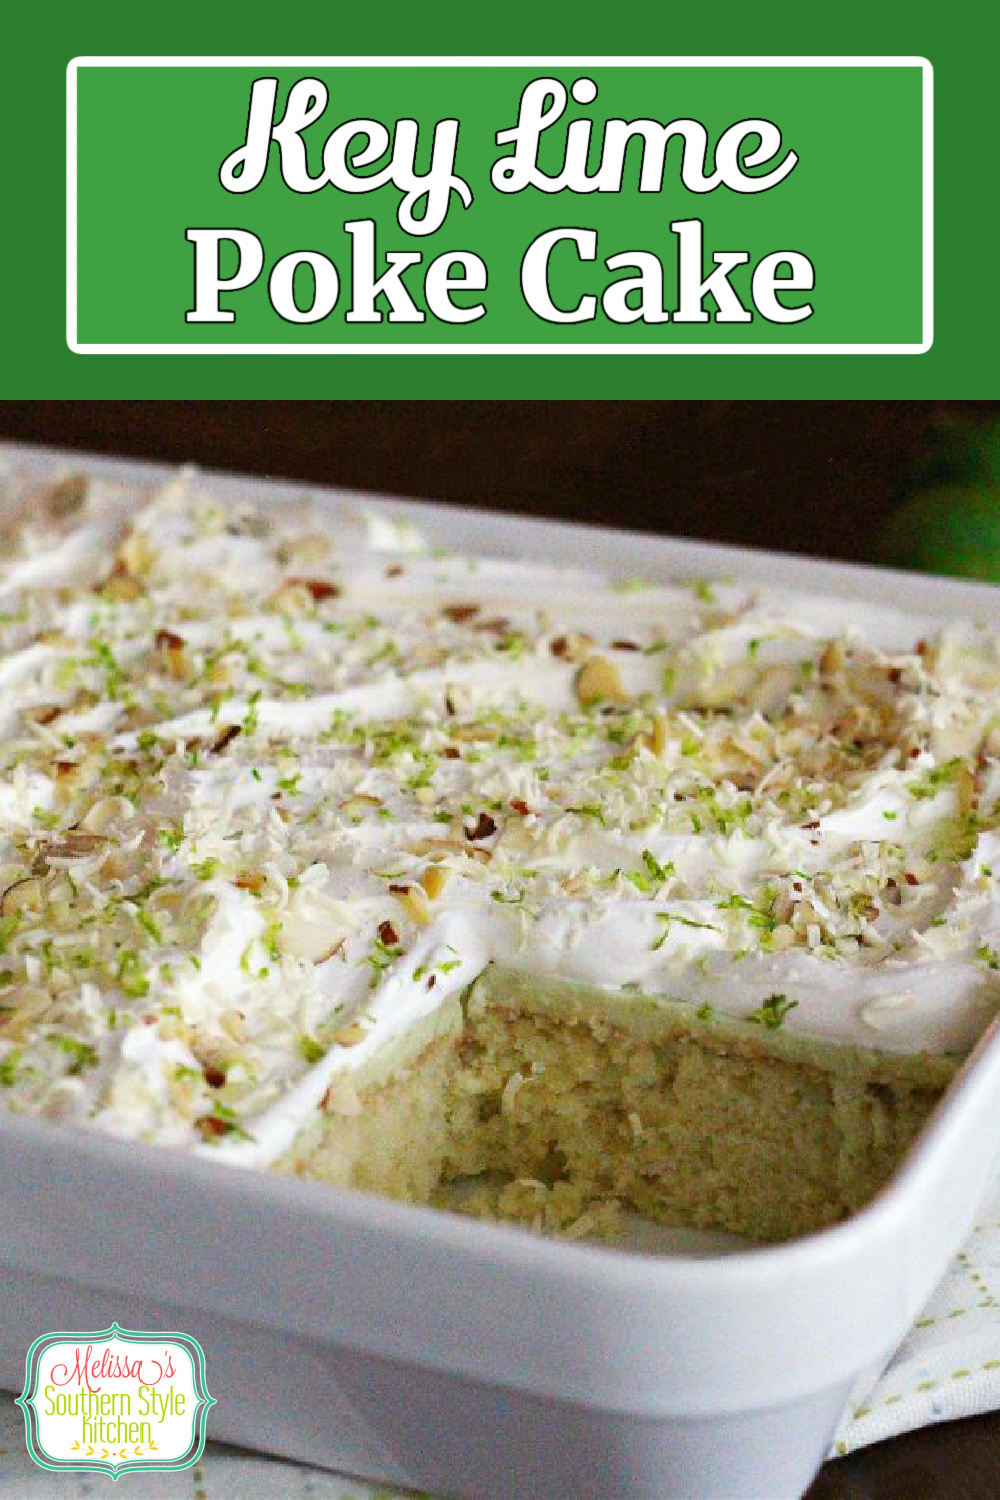 This easy Key Lime Poke Cake is a taste of the island life #keylimecake #keylimepie #keylimedesserts #pokecakerecipes #desserts #dessertfoodrecipes #cakes #sheetcakerecipes